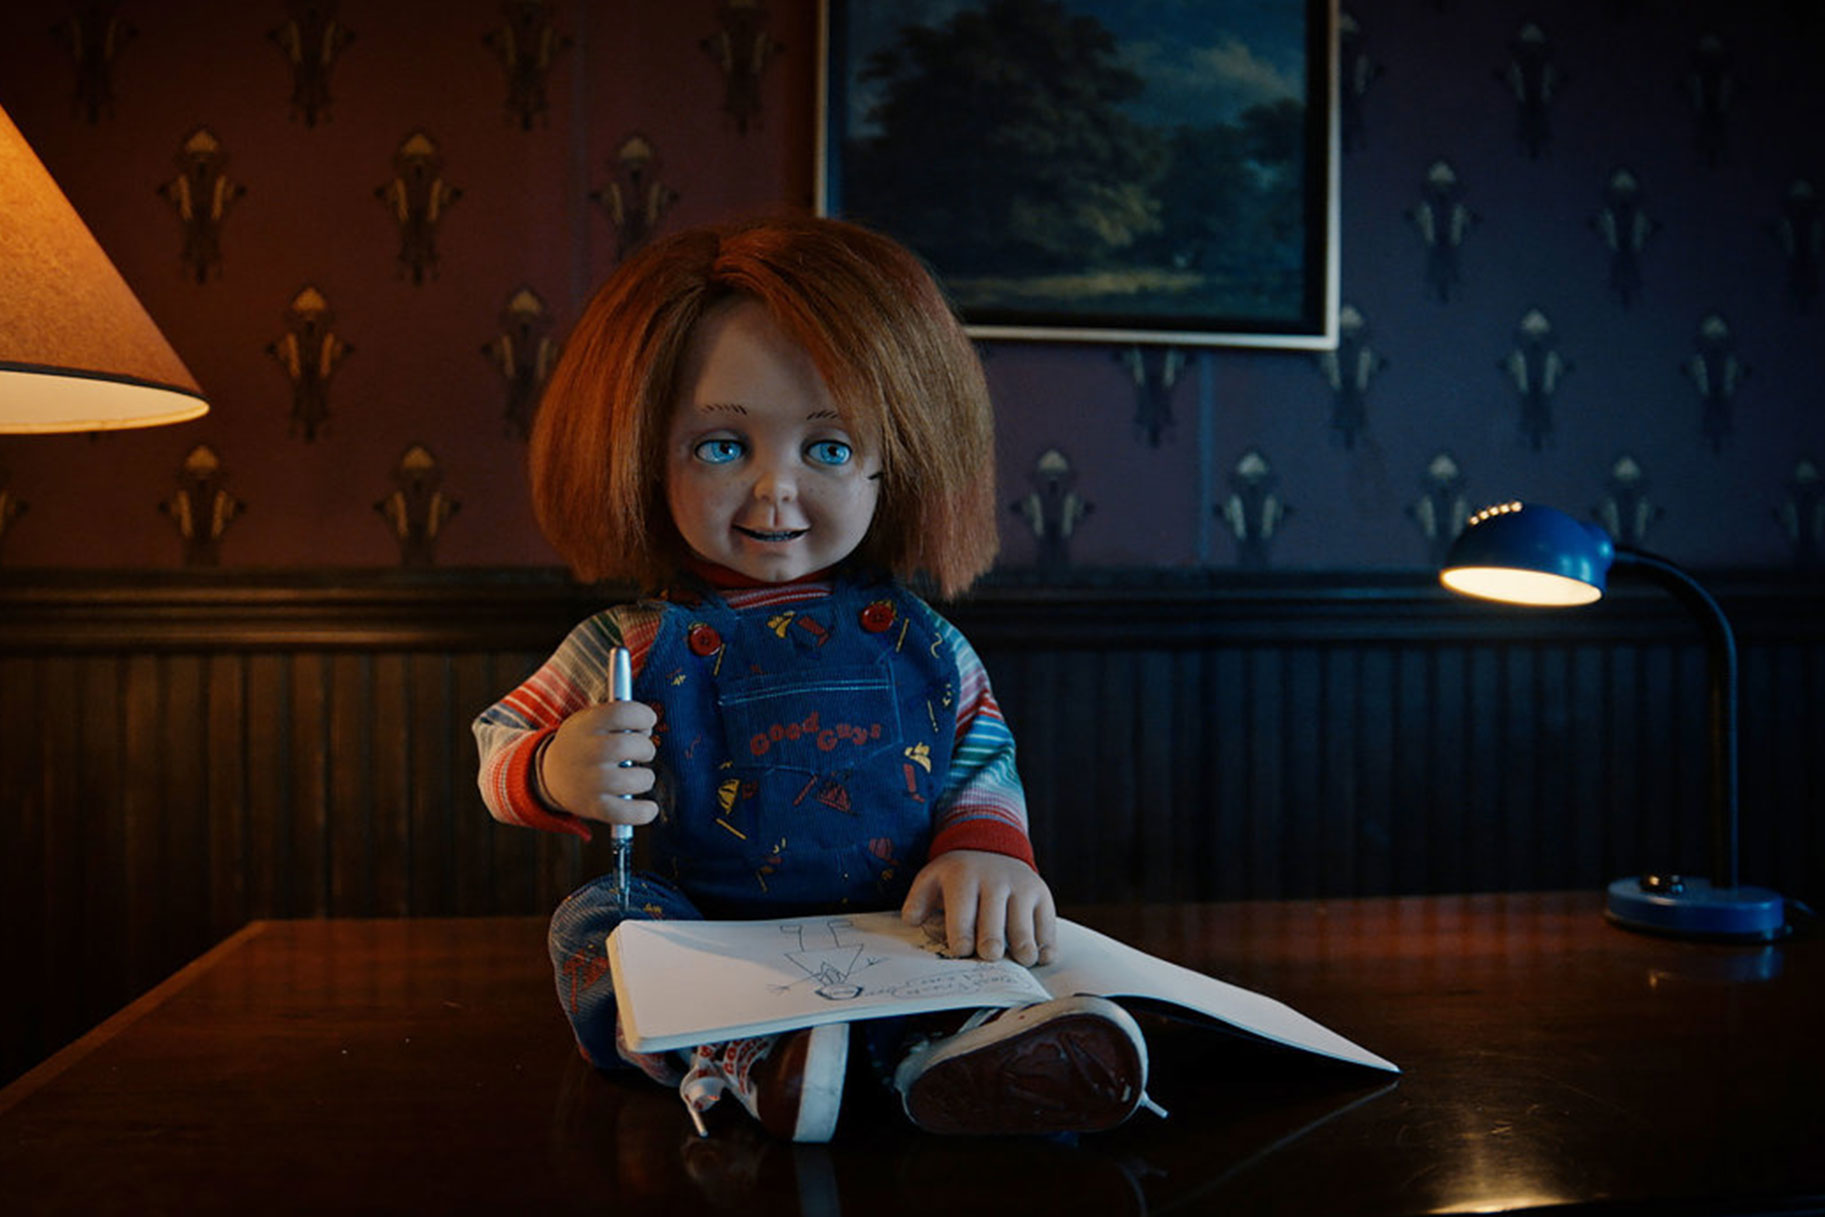 Chucky sitting on a desk